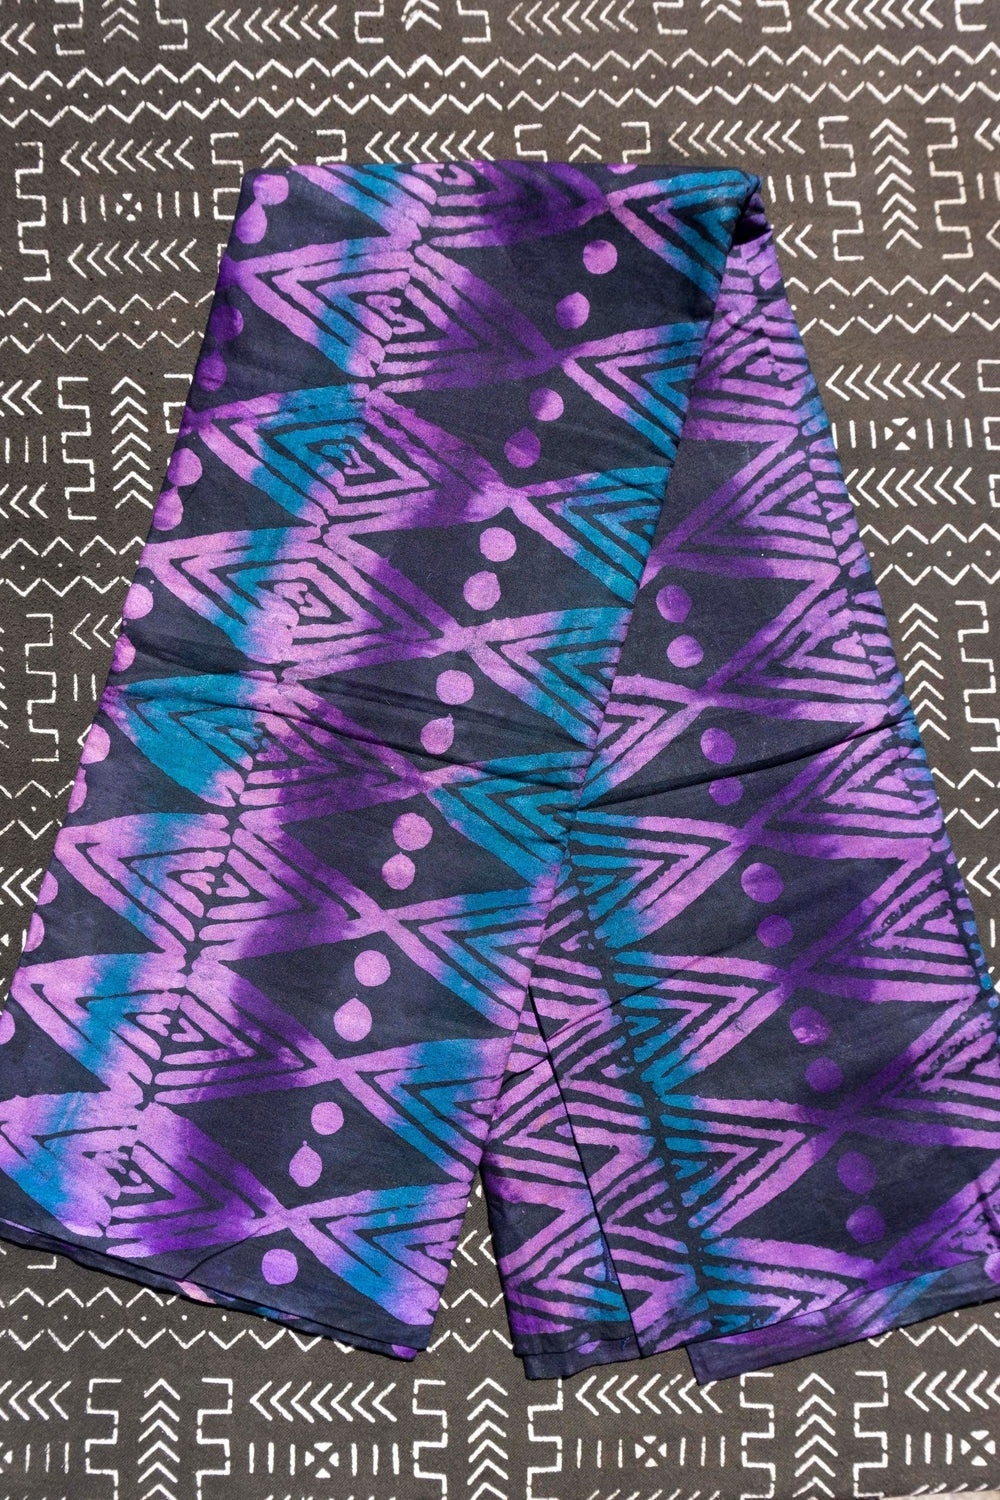 Diamond Purple Batik Fabric